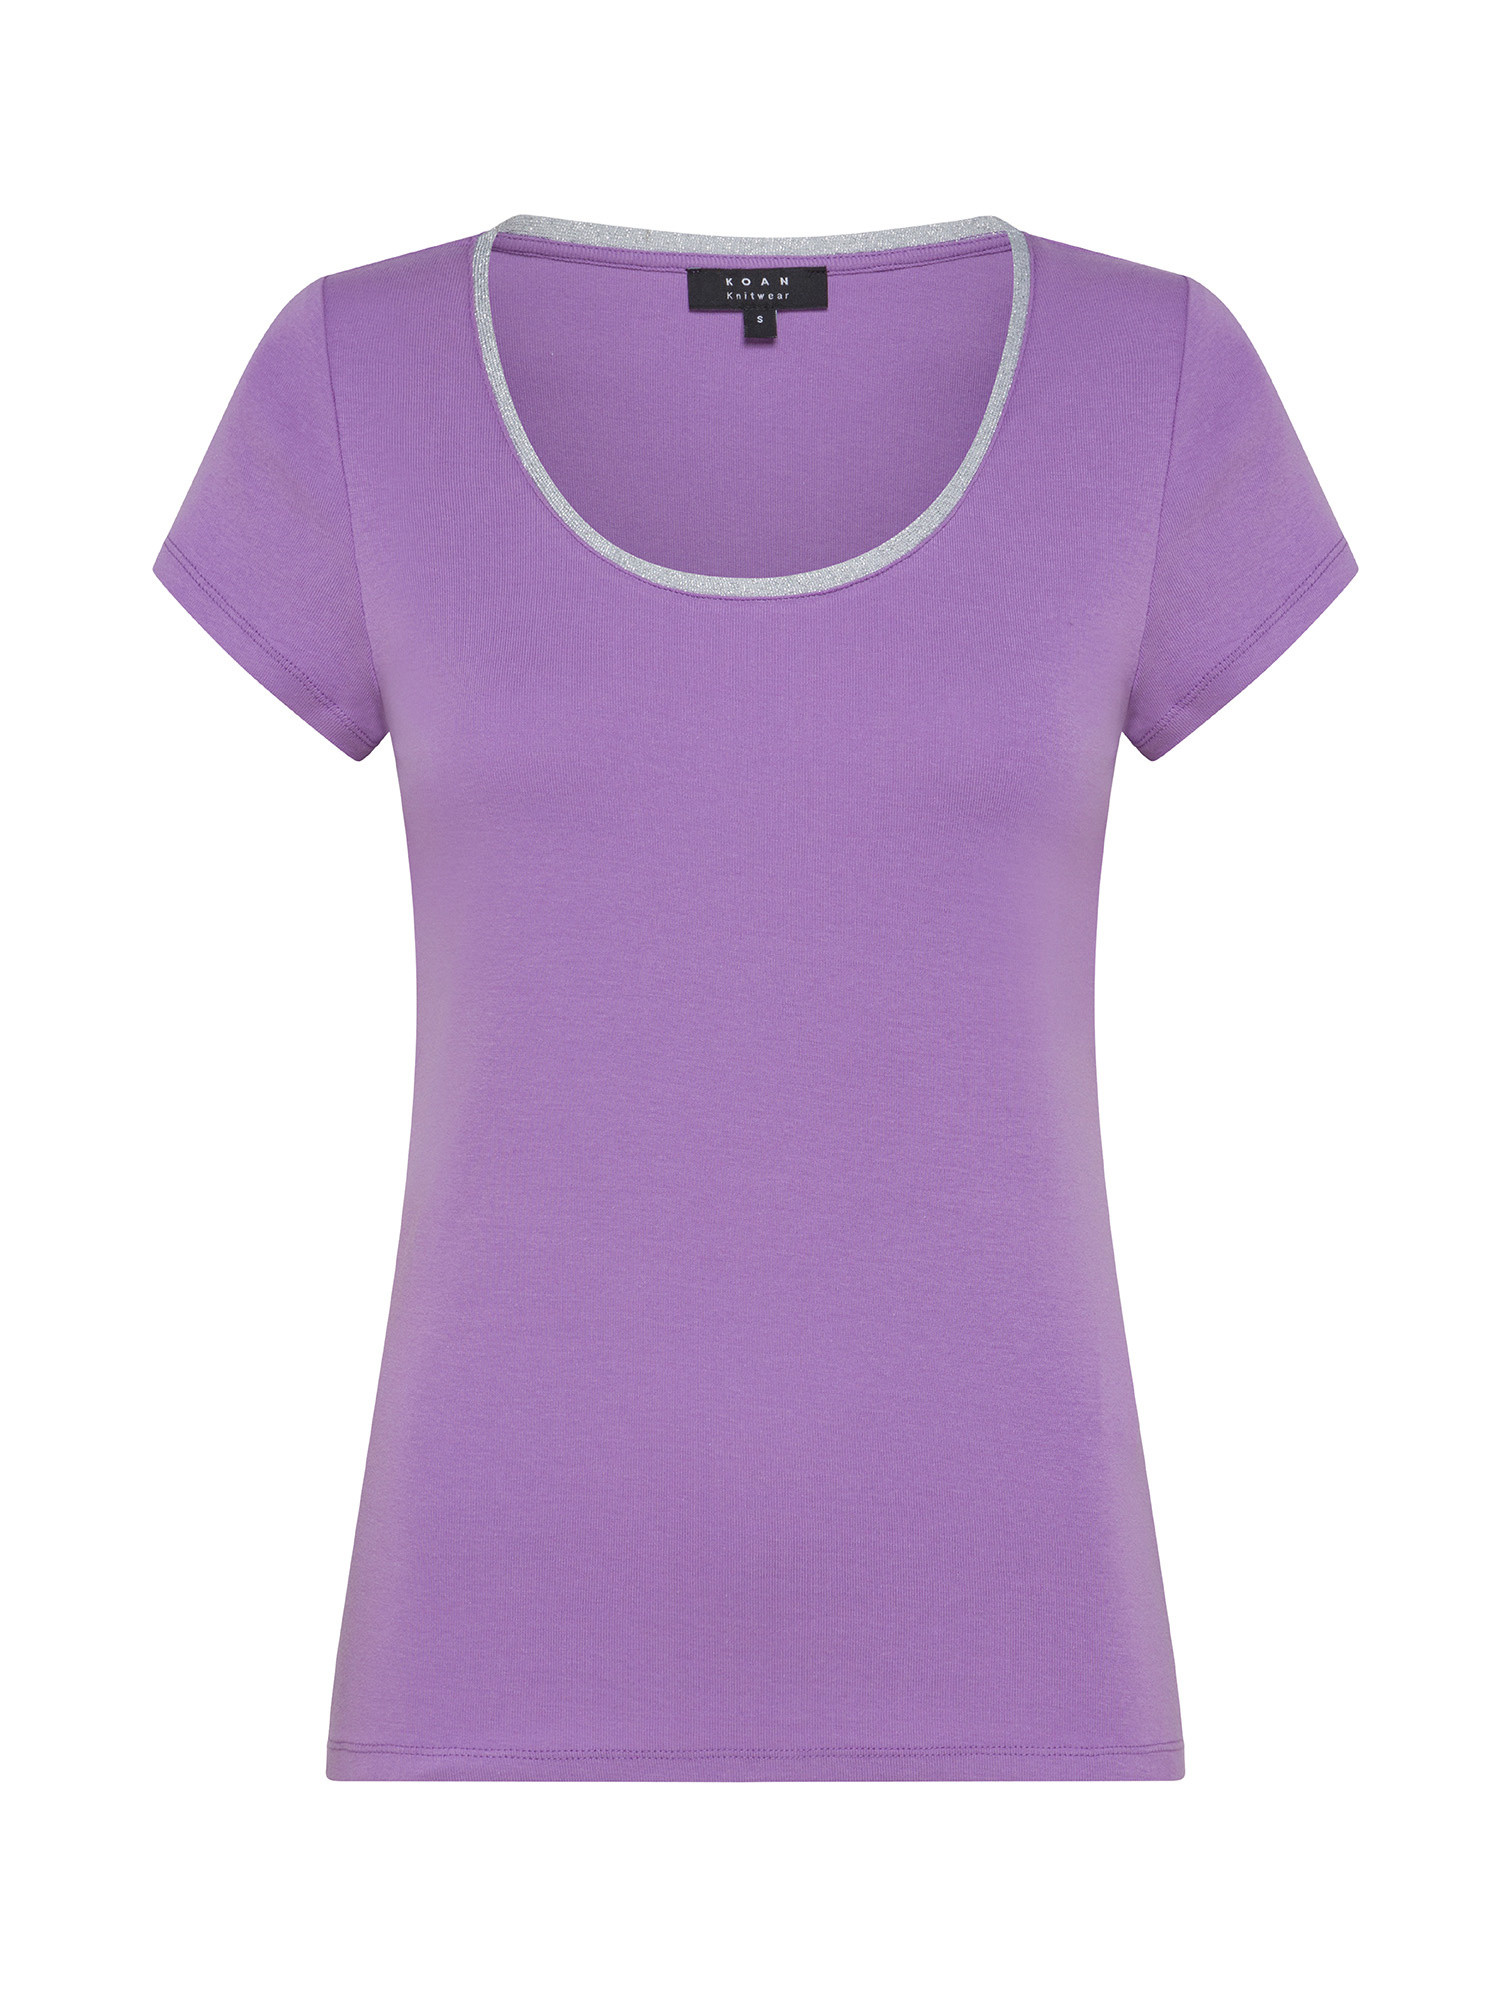 Koan - Cotton T-shirt with lurex, Purple Lilac, large image number 0